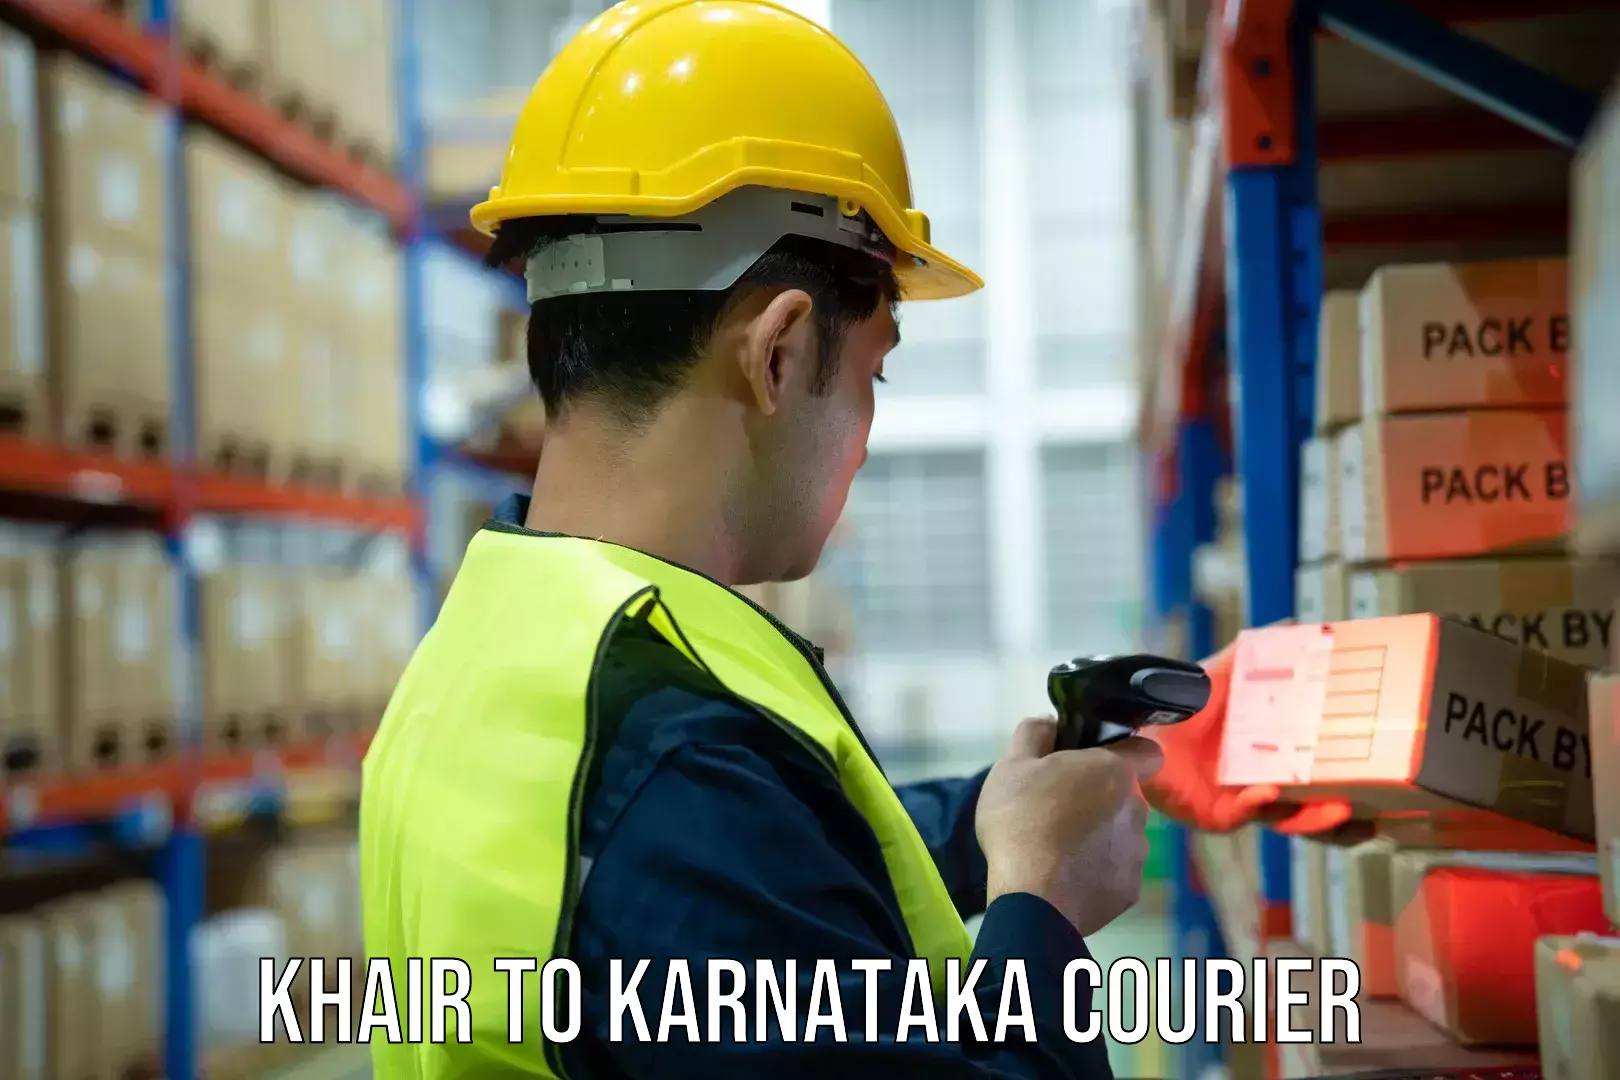 User-friendly delivery service Khair to Karnataka